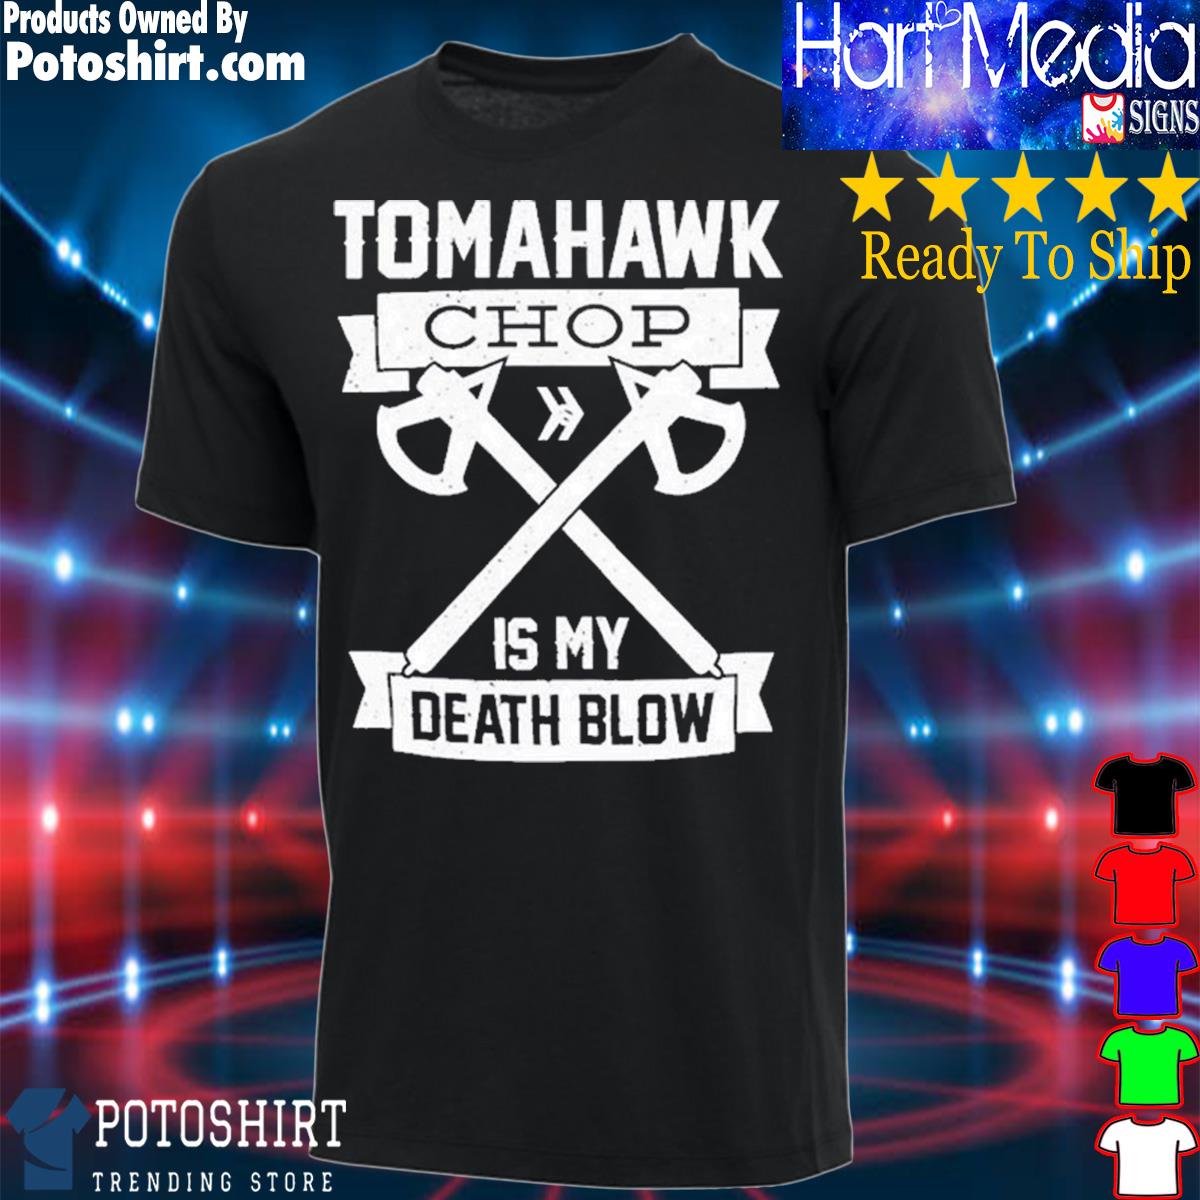 Smosh Tomahawk Chop 100m Shirt